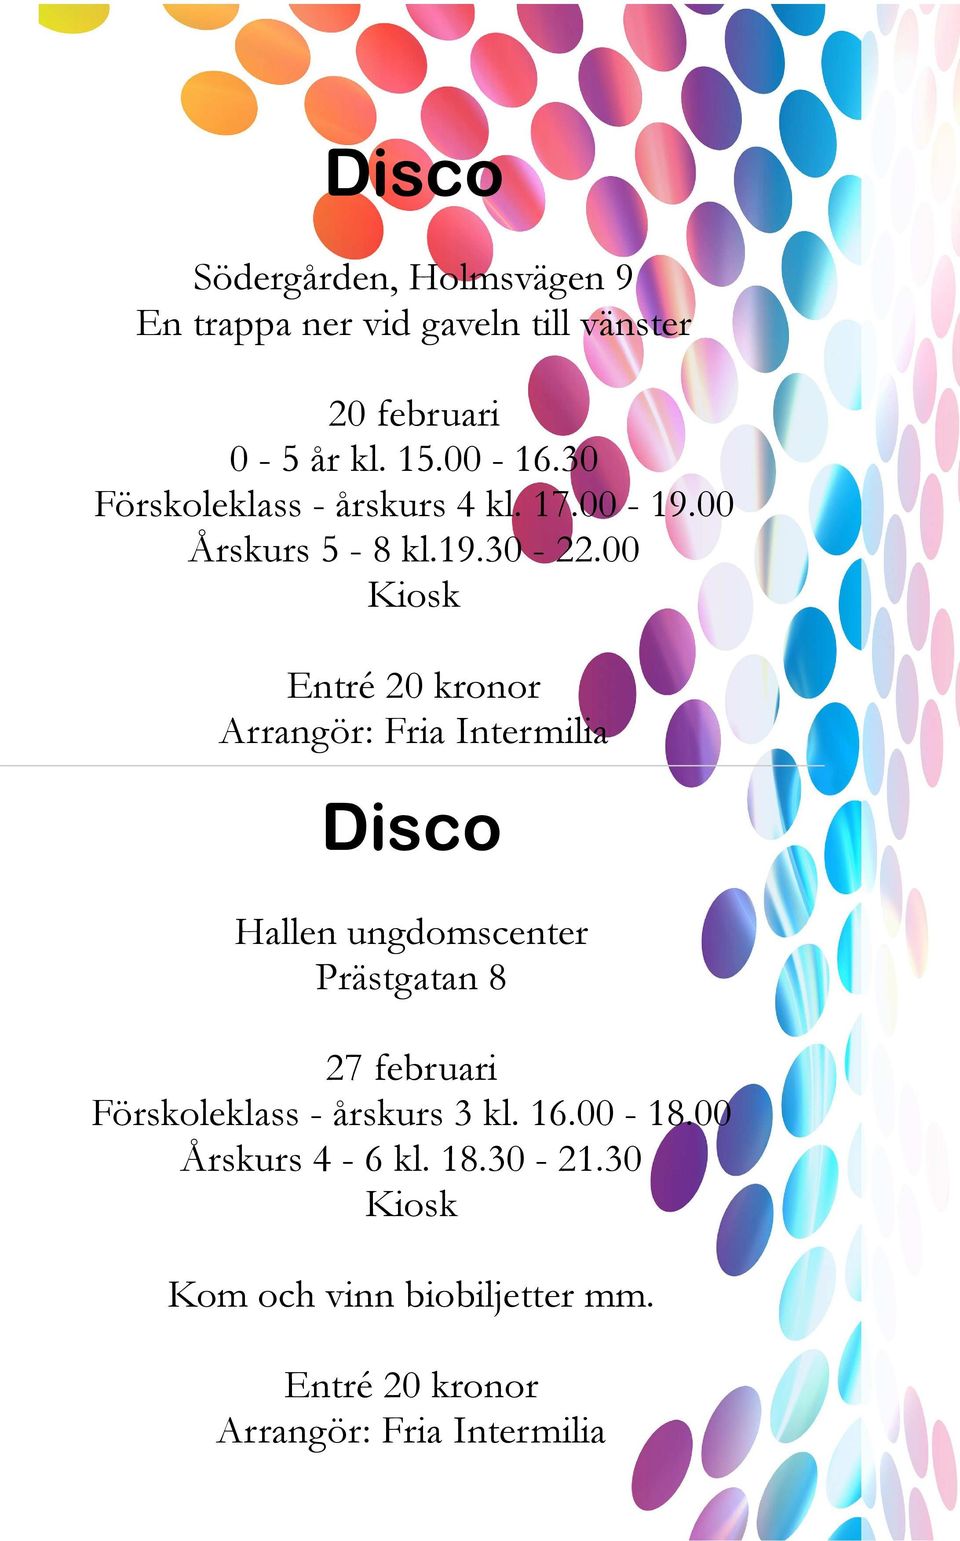 00 Kiosk Entré 20 kronor Arrangör: Fria Intermilia Disco Hallen ungdomscenter Prästgatan 8 27 februari